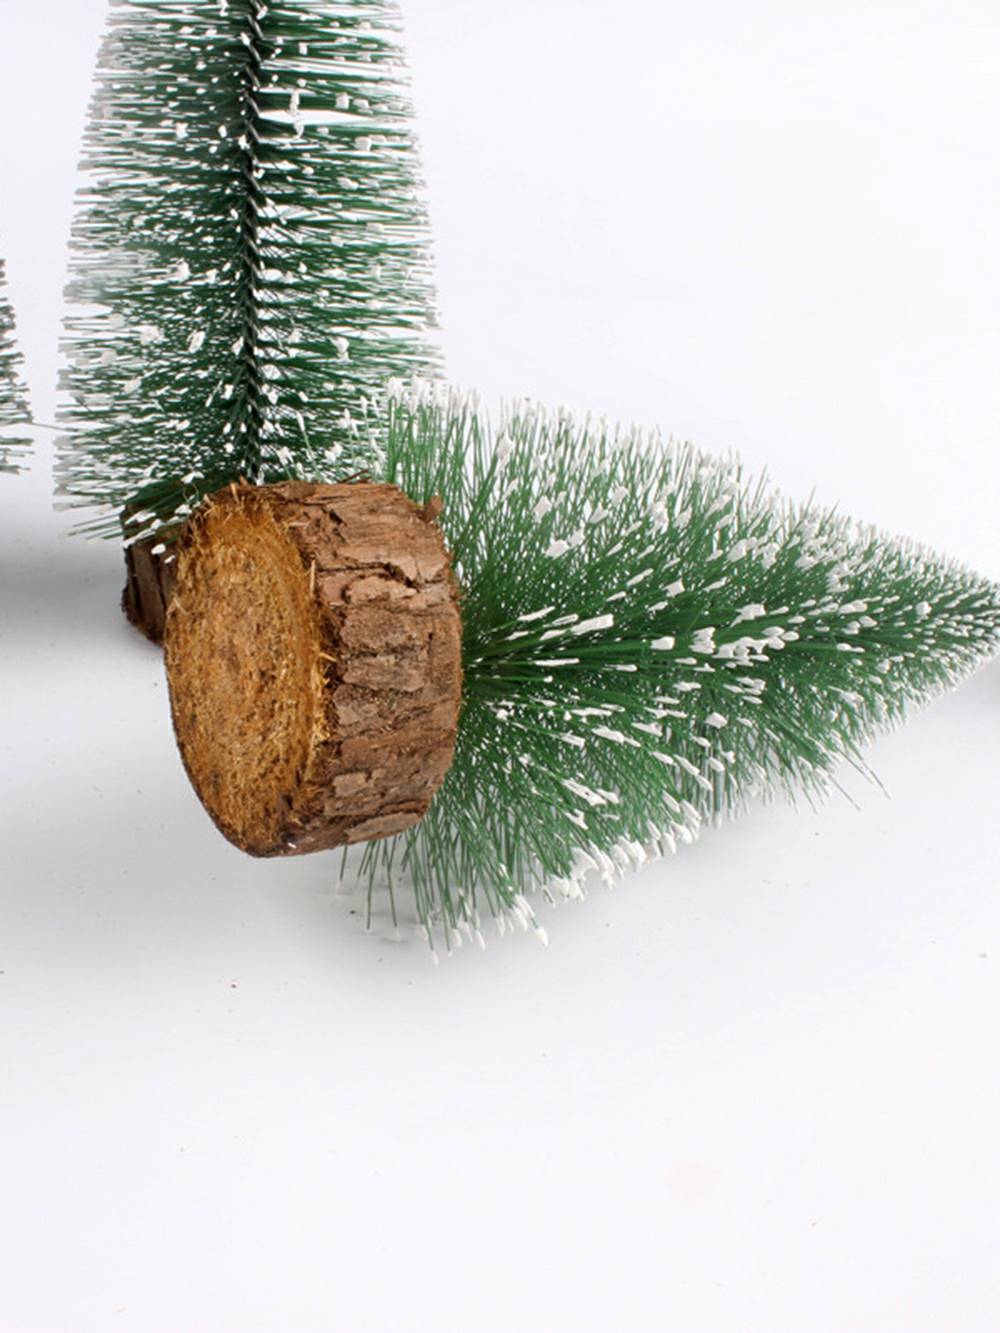 DIY Snow-Covered Pine Christmas Tree